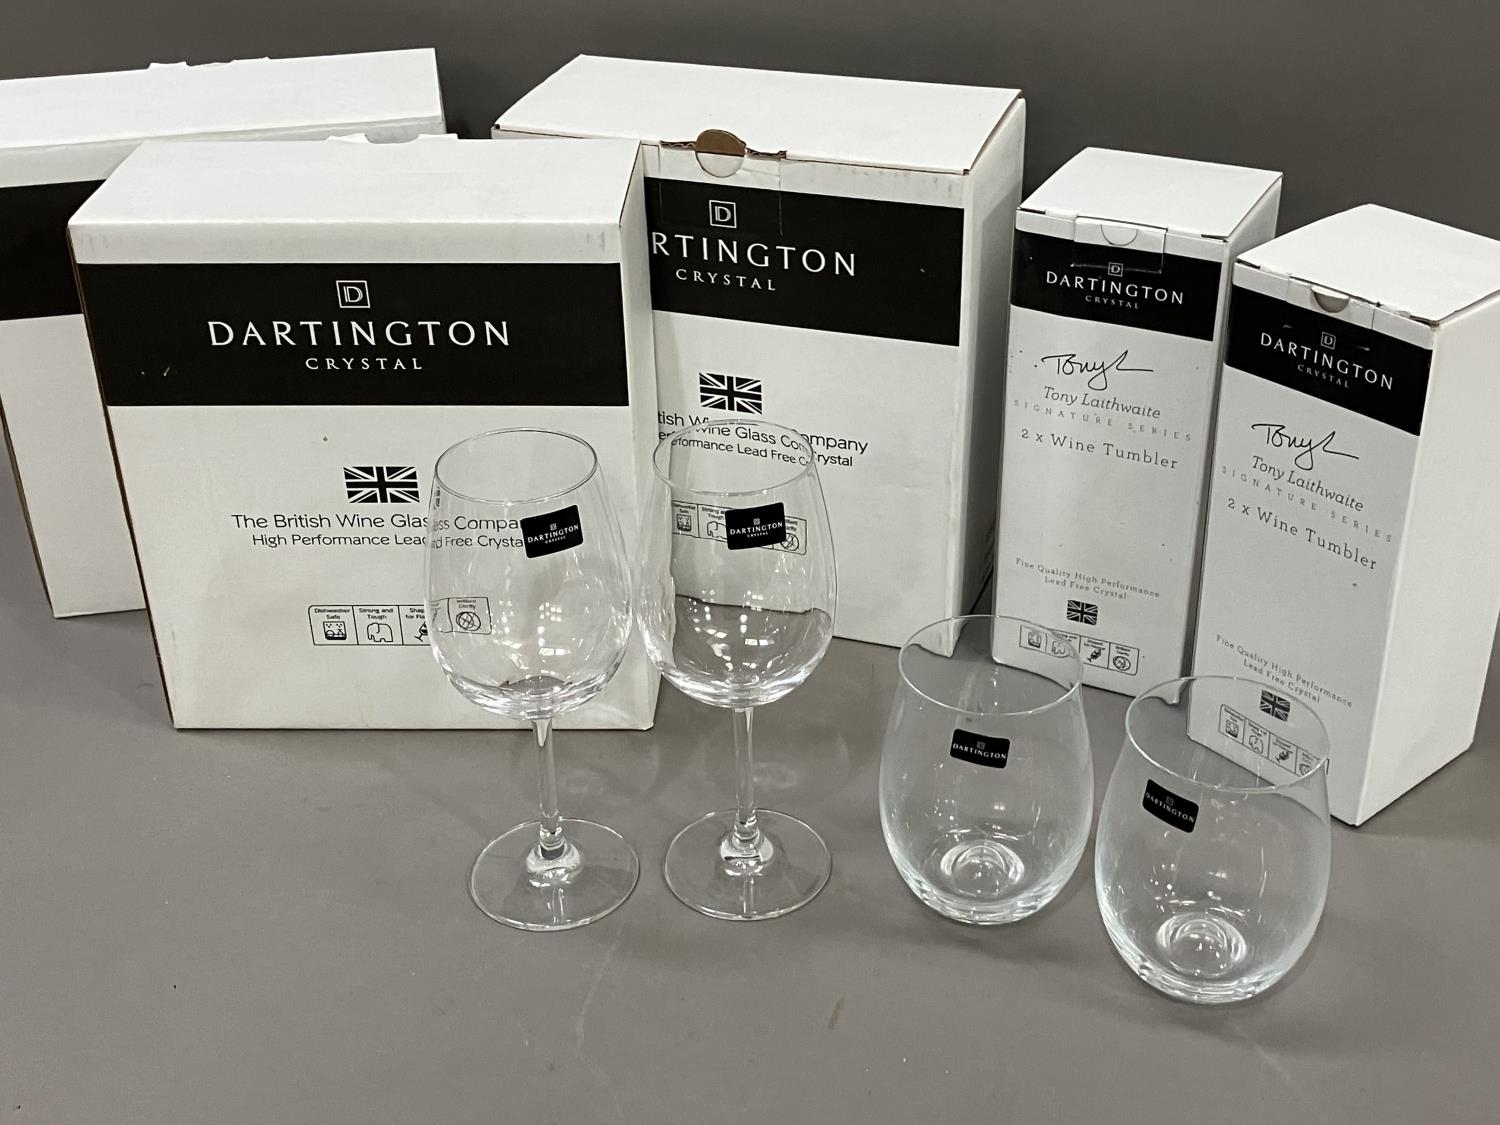 Two sets of Dartington crystal wine tumblers by Tony Laithwaite, and three pairs of Dartington